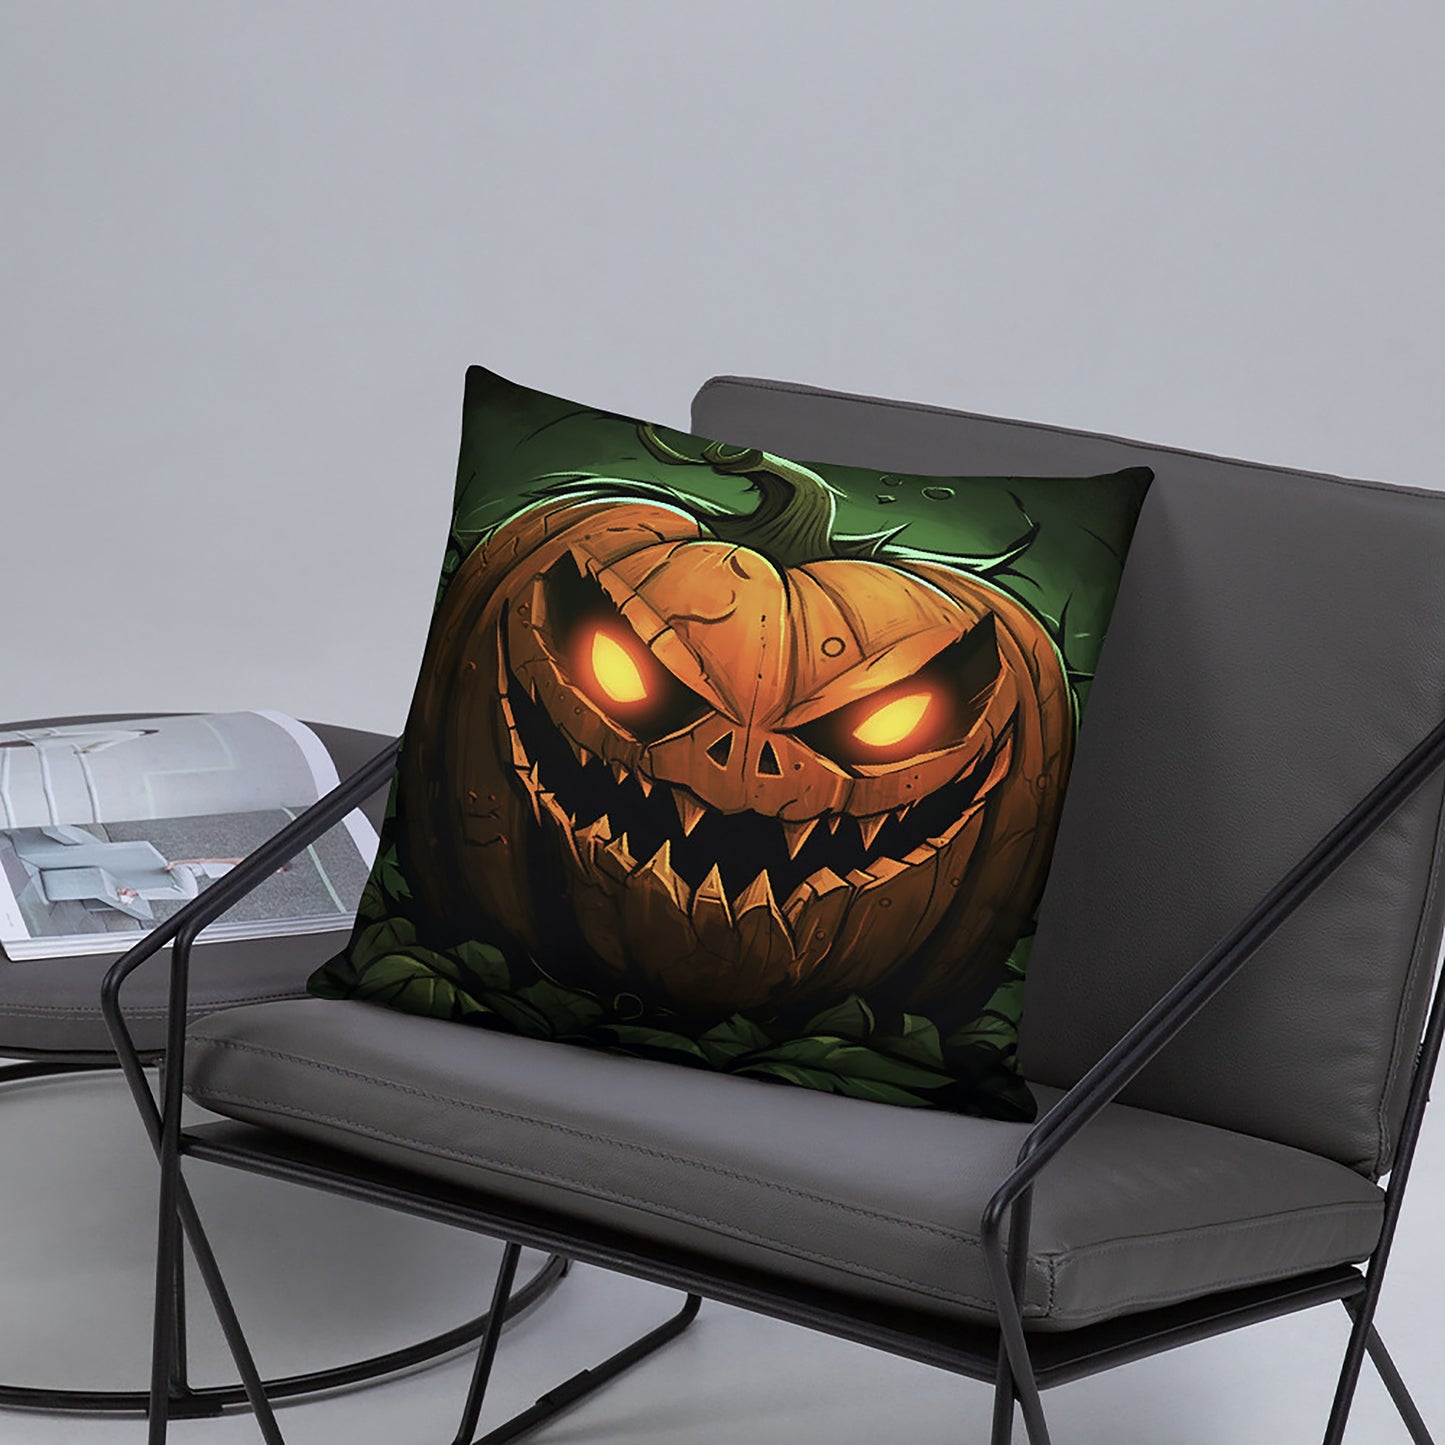 Halloween Throw Pillow Nightmarish Pumpkin Polyester Decorative Cushion 18x18